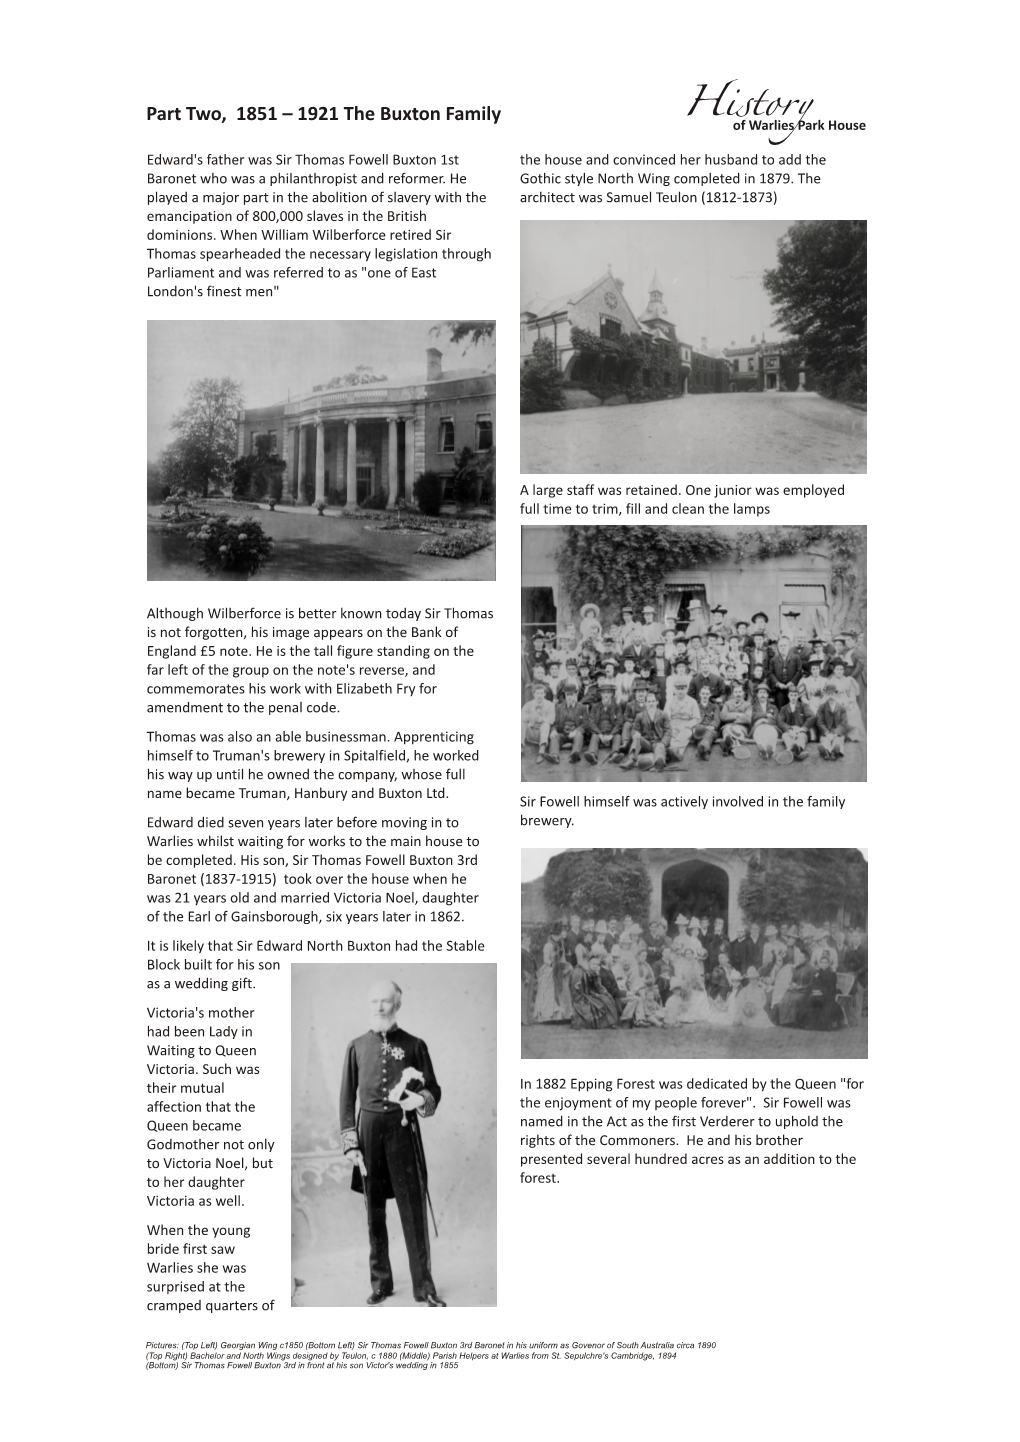 History of Warlies Park House